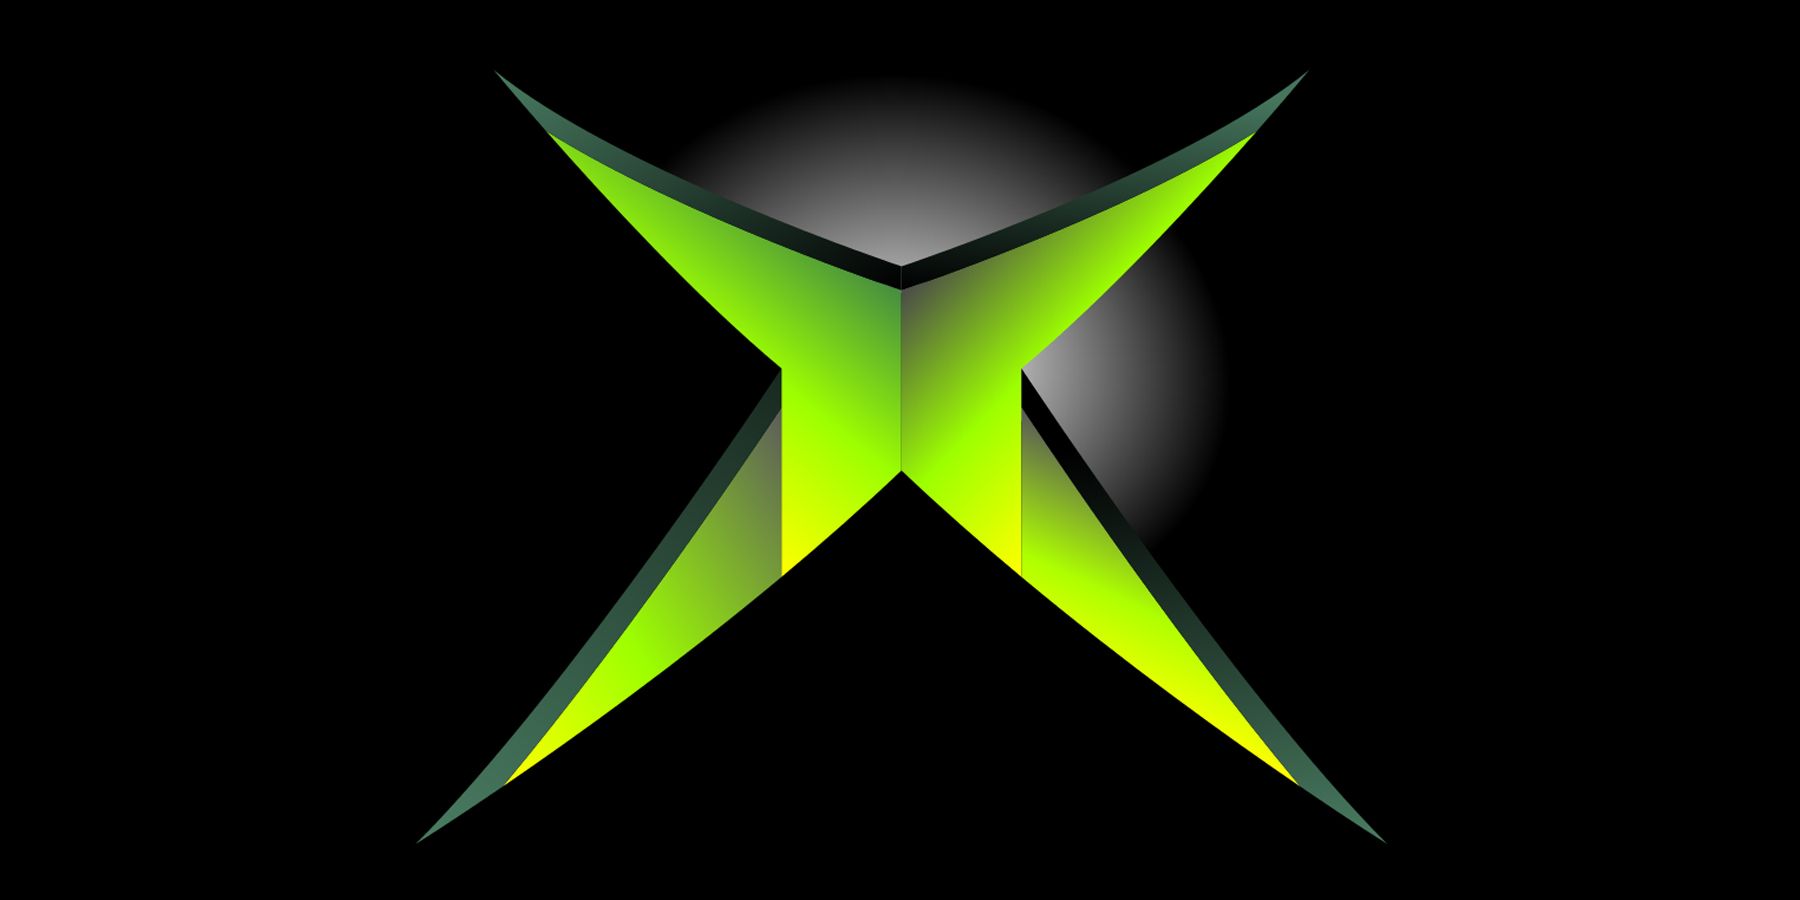 Origional Xbox green X logo